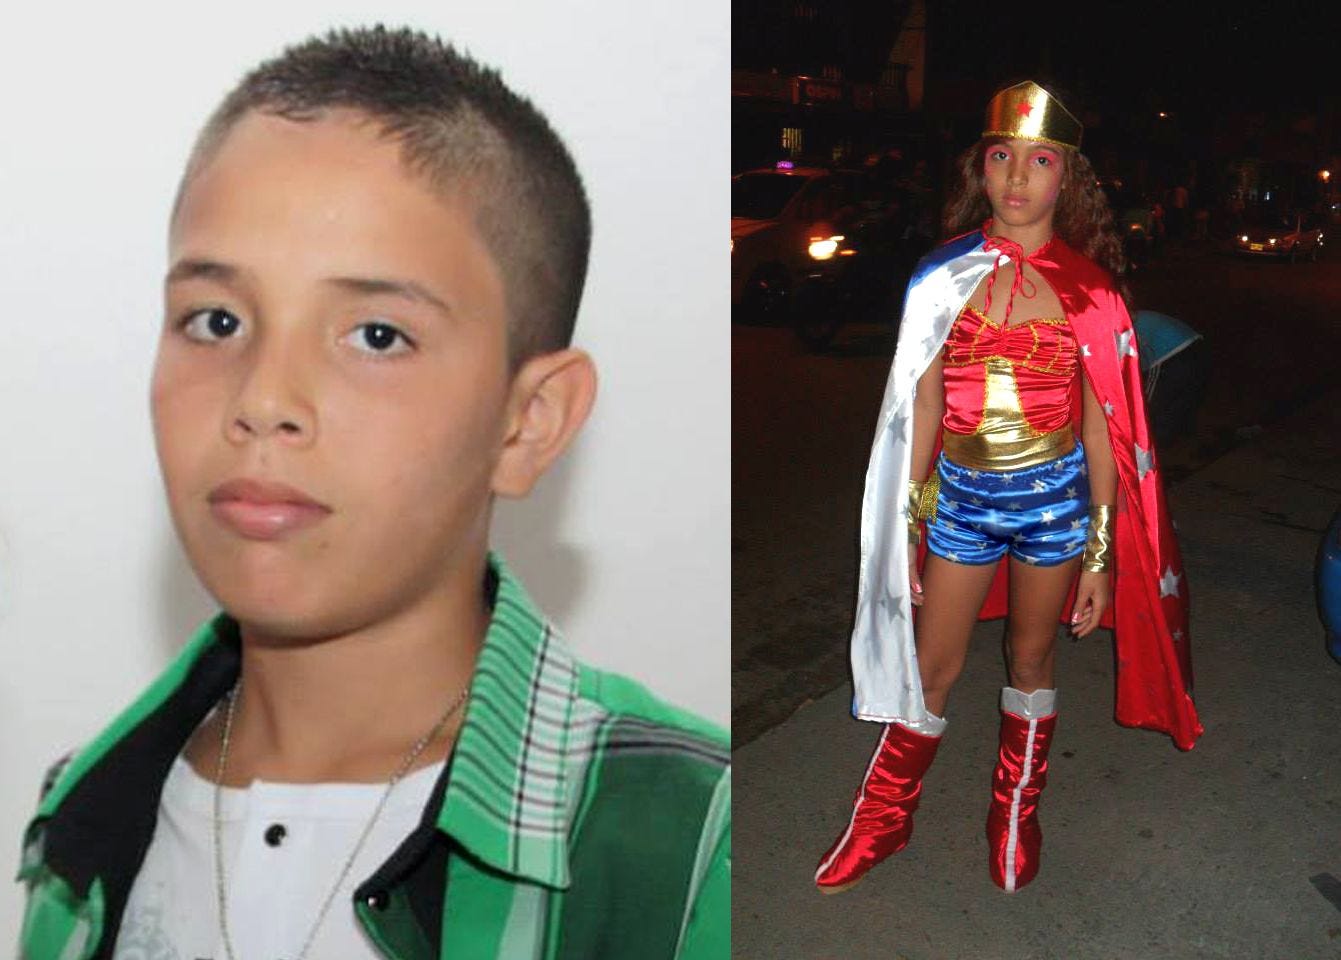 Boy dressed as Wonder Woman for Halloween